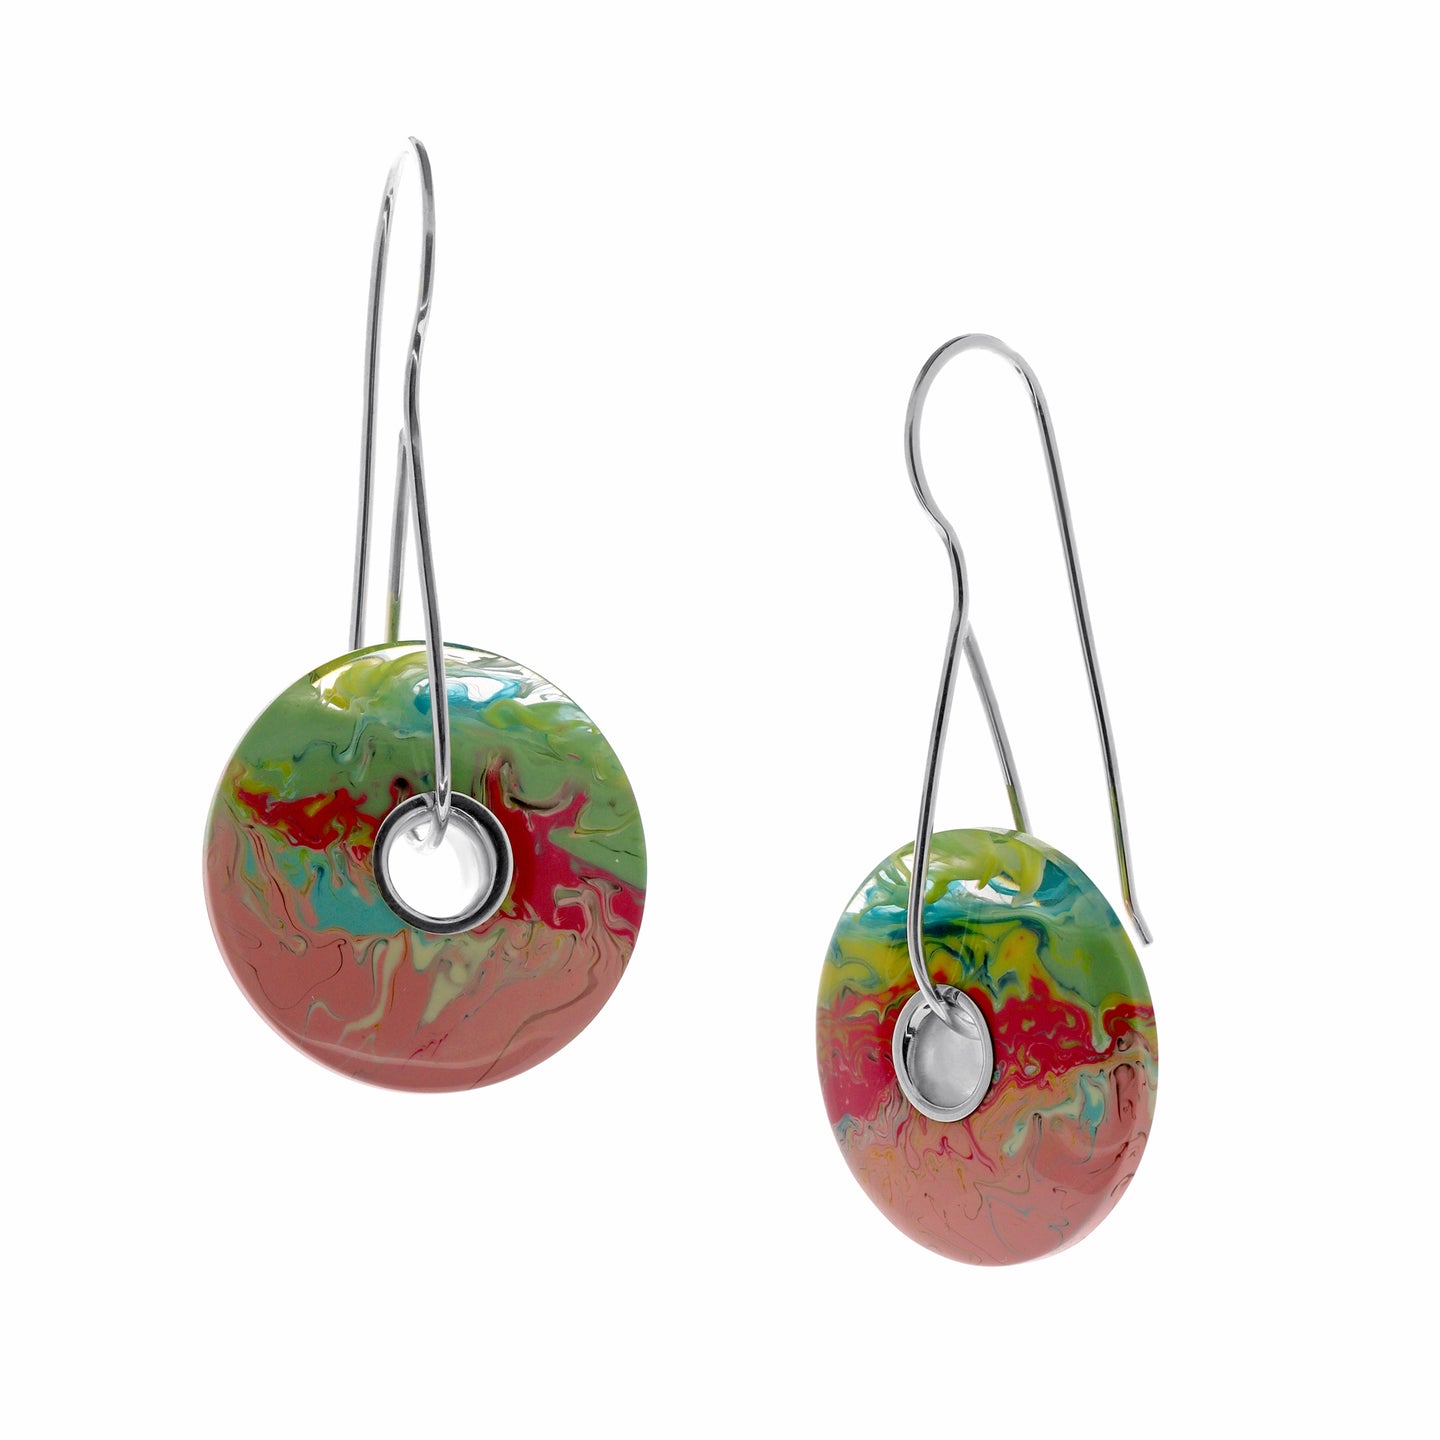 Coral : Lifebuoy earrings